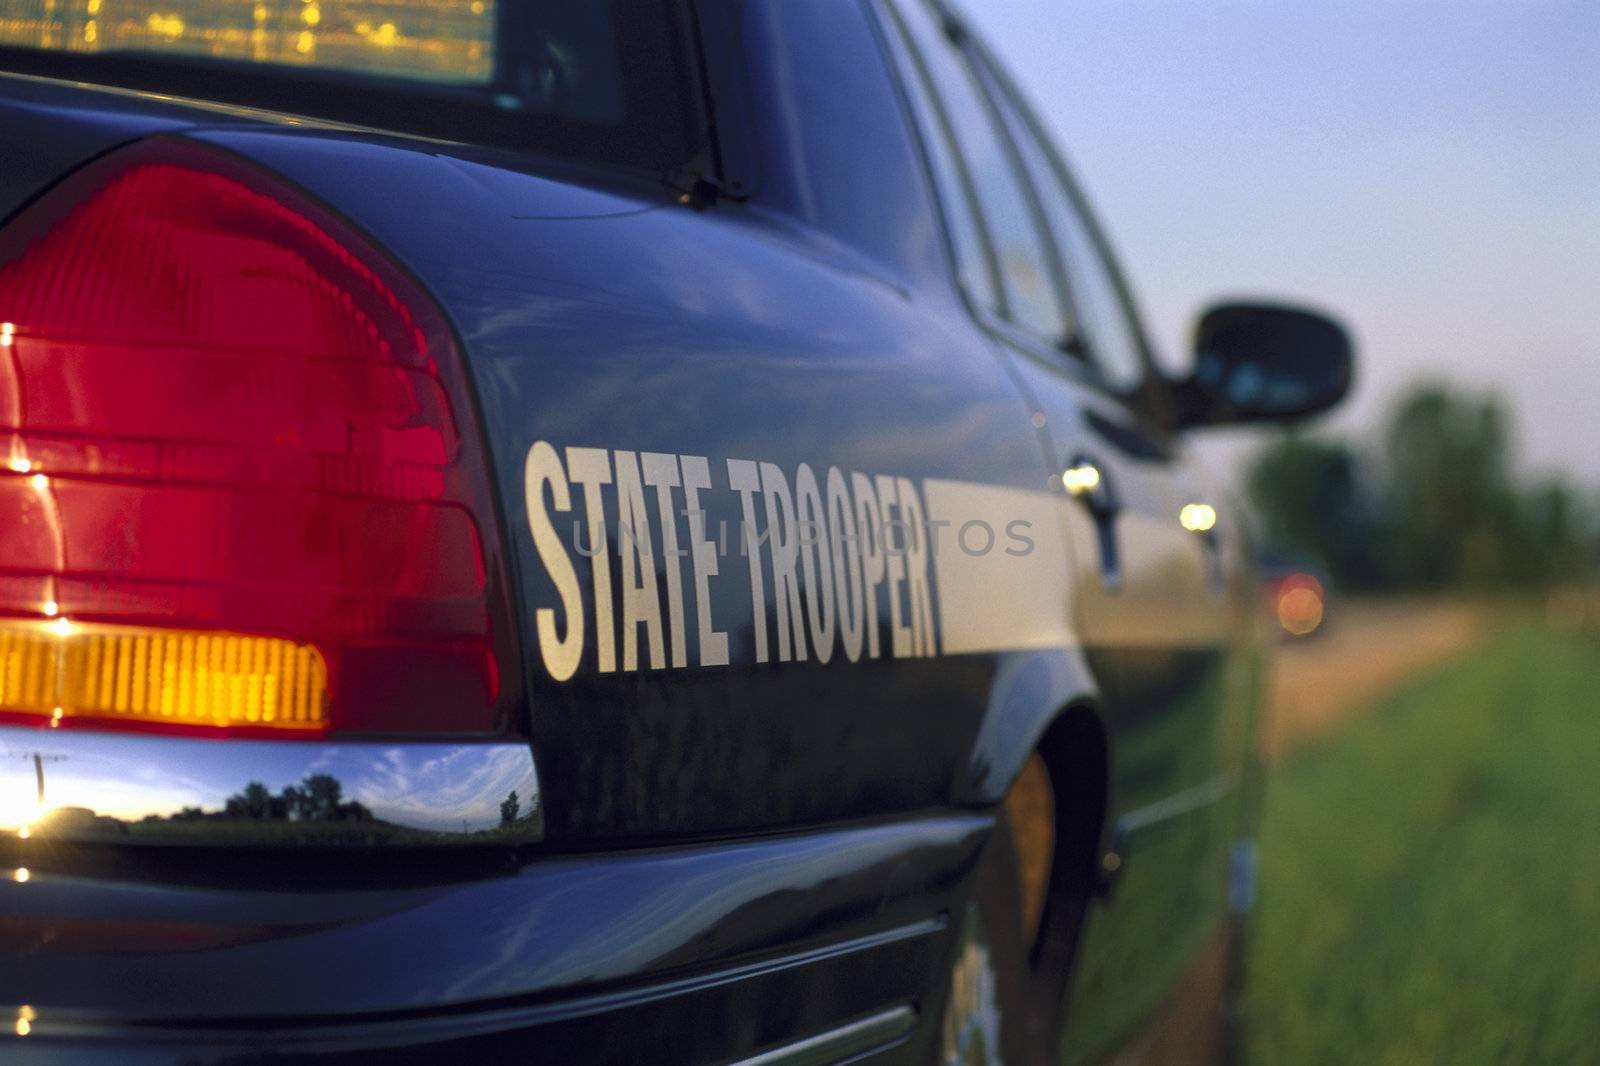 State Trooper's Car by photo_guru